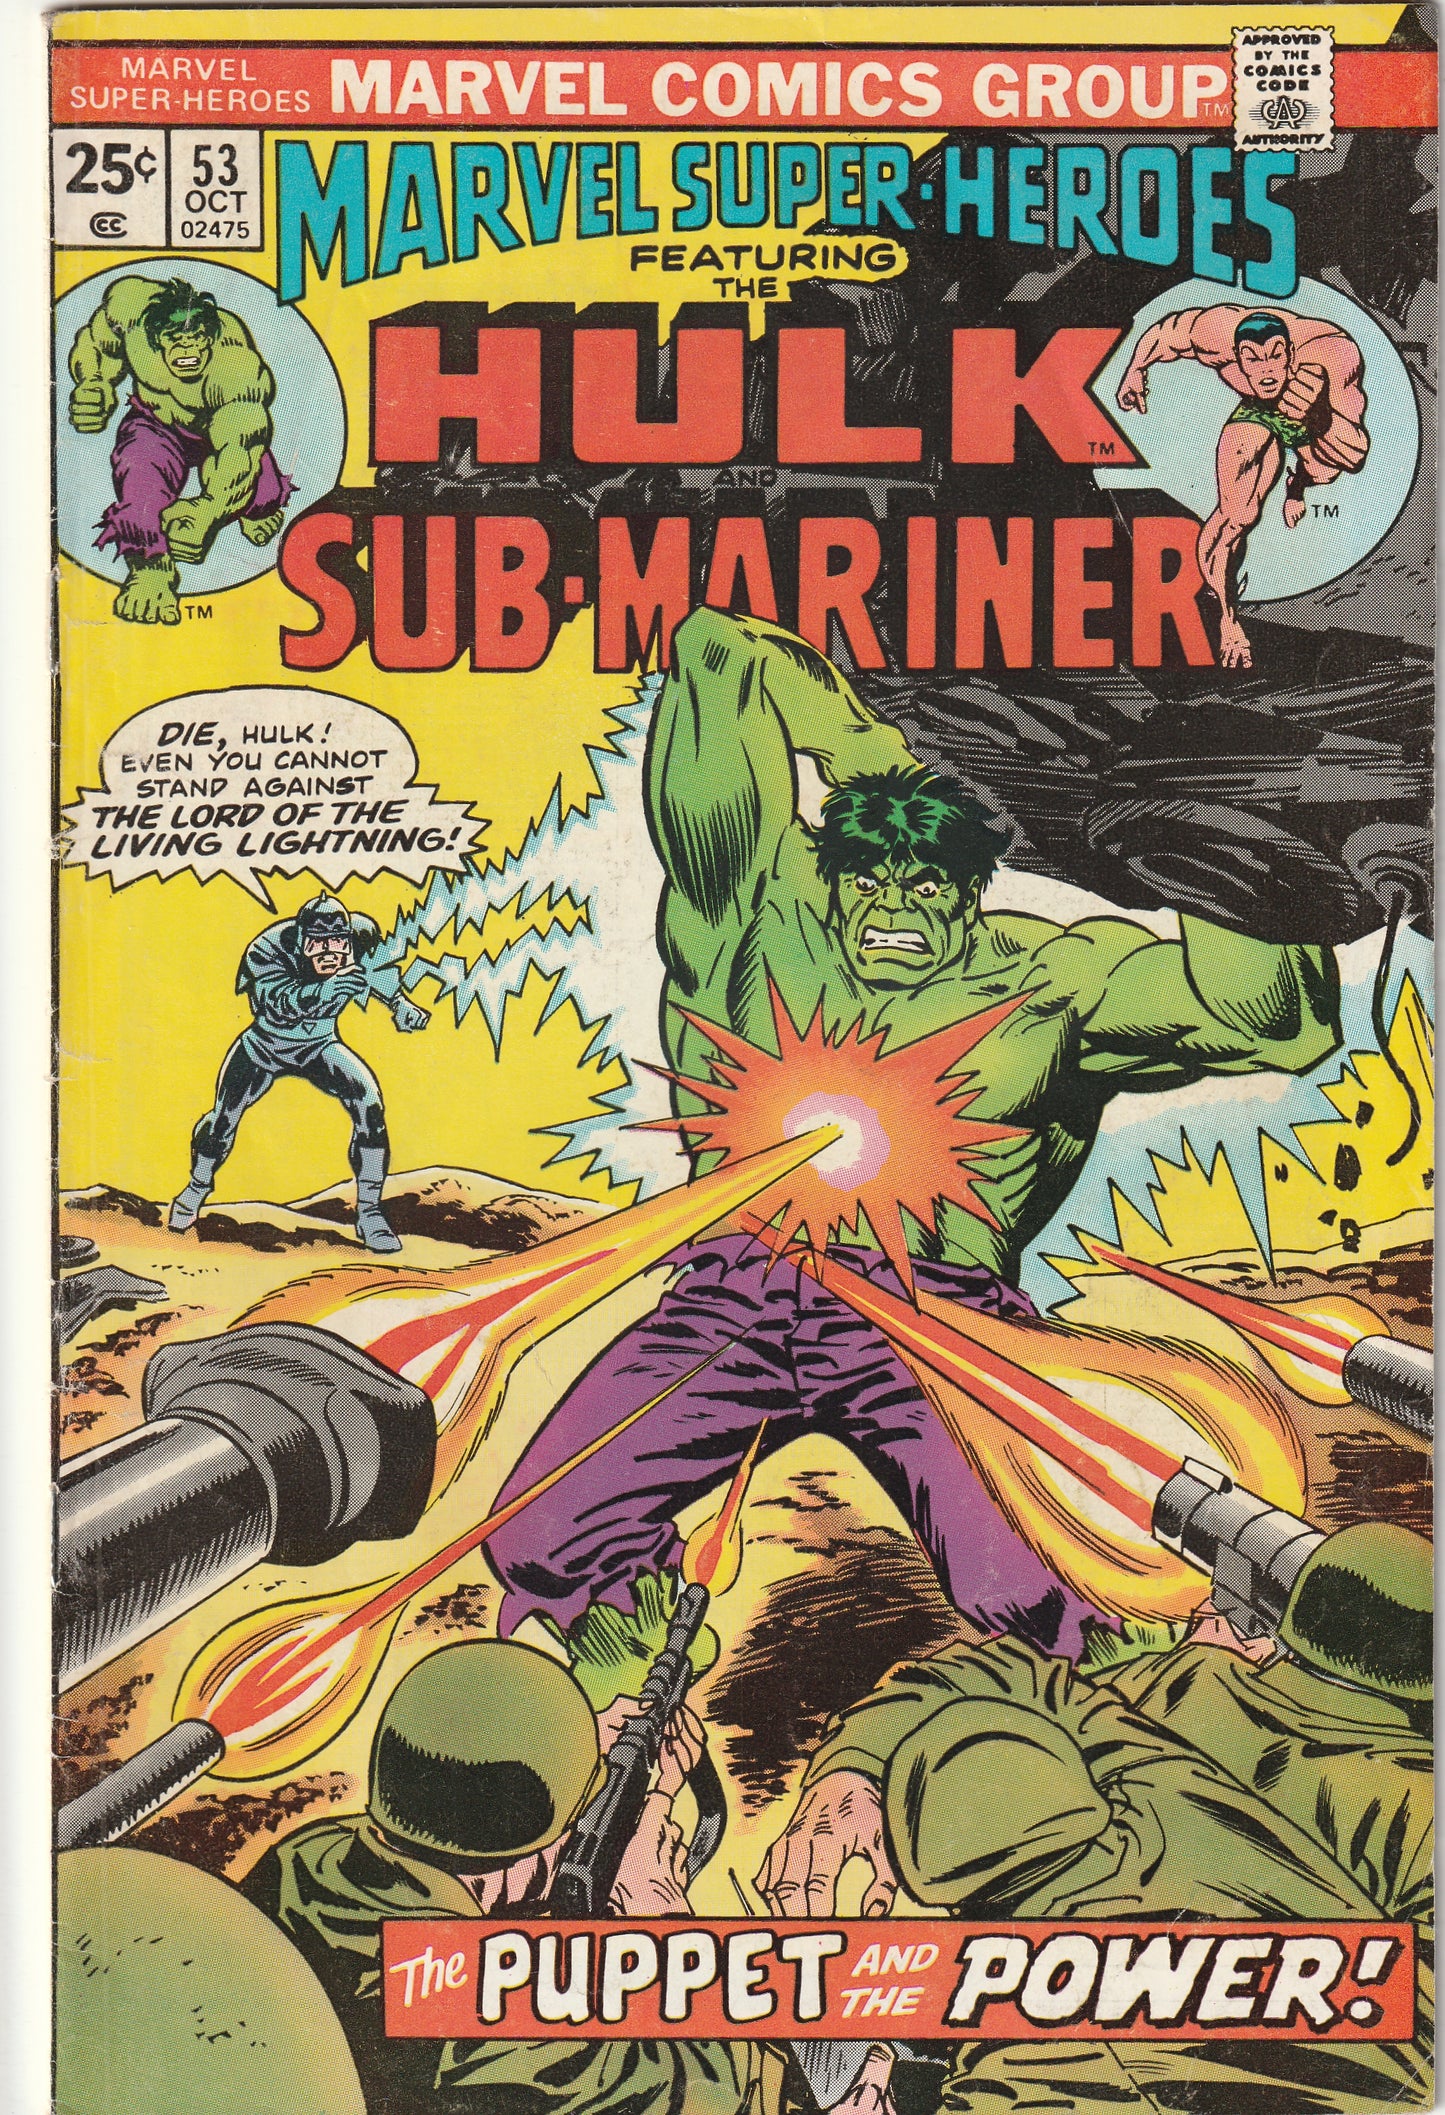 Marvel Super-Heroes #53 (1975) - Reprints Tales to Astonish 98